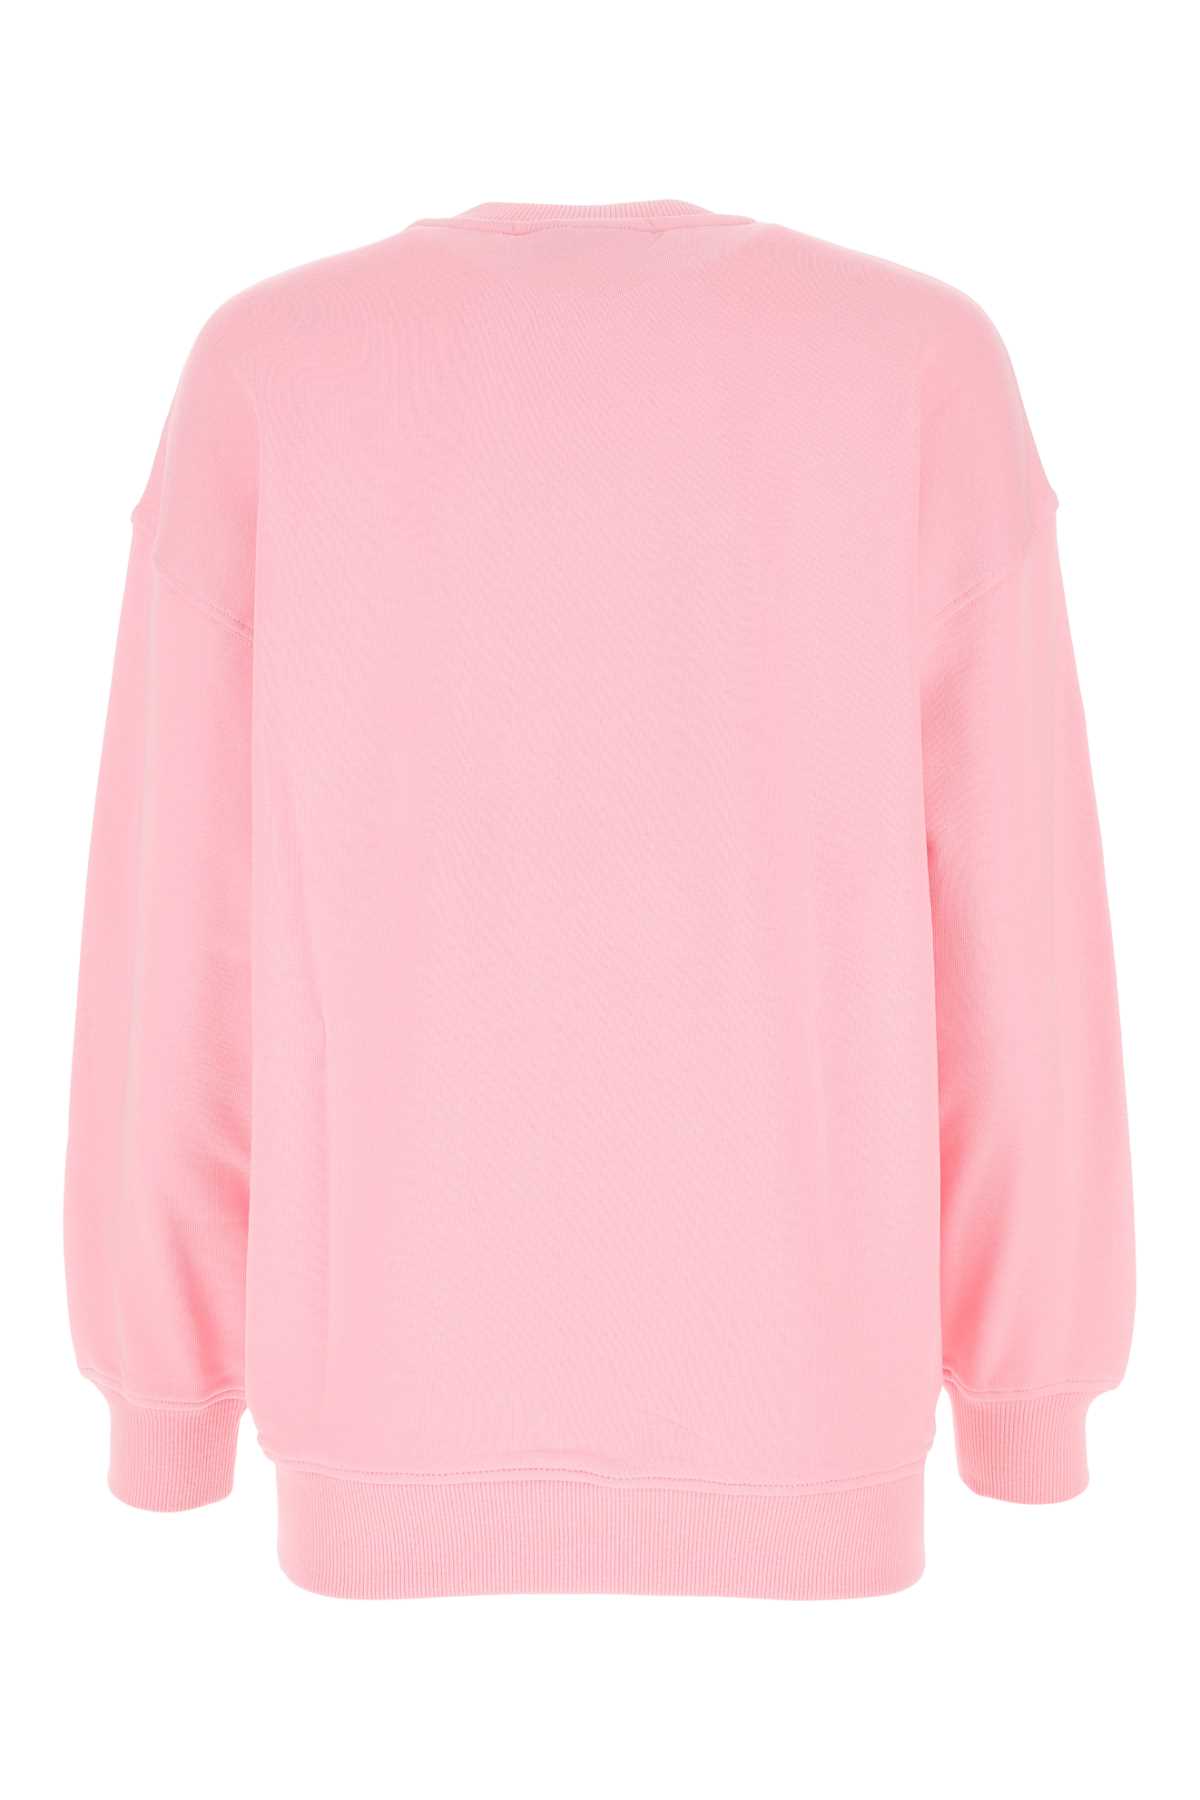 Chiara Ferragni Pink Cotton Sweatshirt In Multicolor